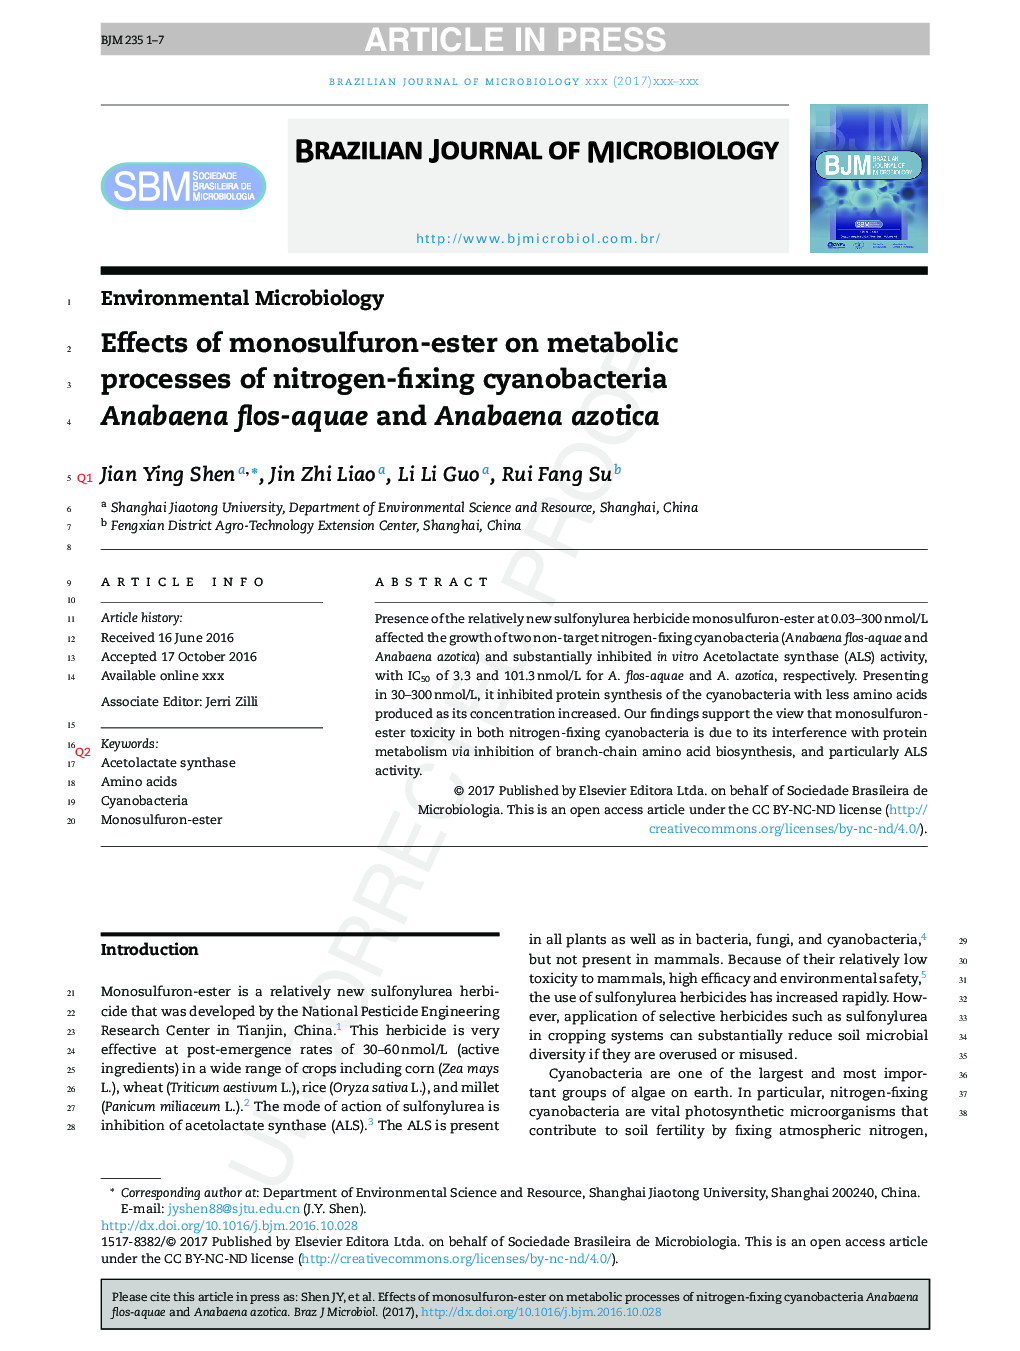 Effects of monosulfuron-ester on metabolic processes of nitrogen-fixing cyanobacteria Anabaena flos-aquae and Anabaena azotica